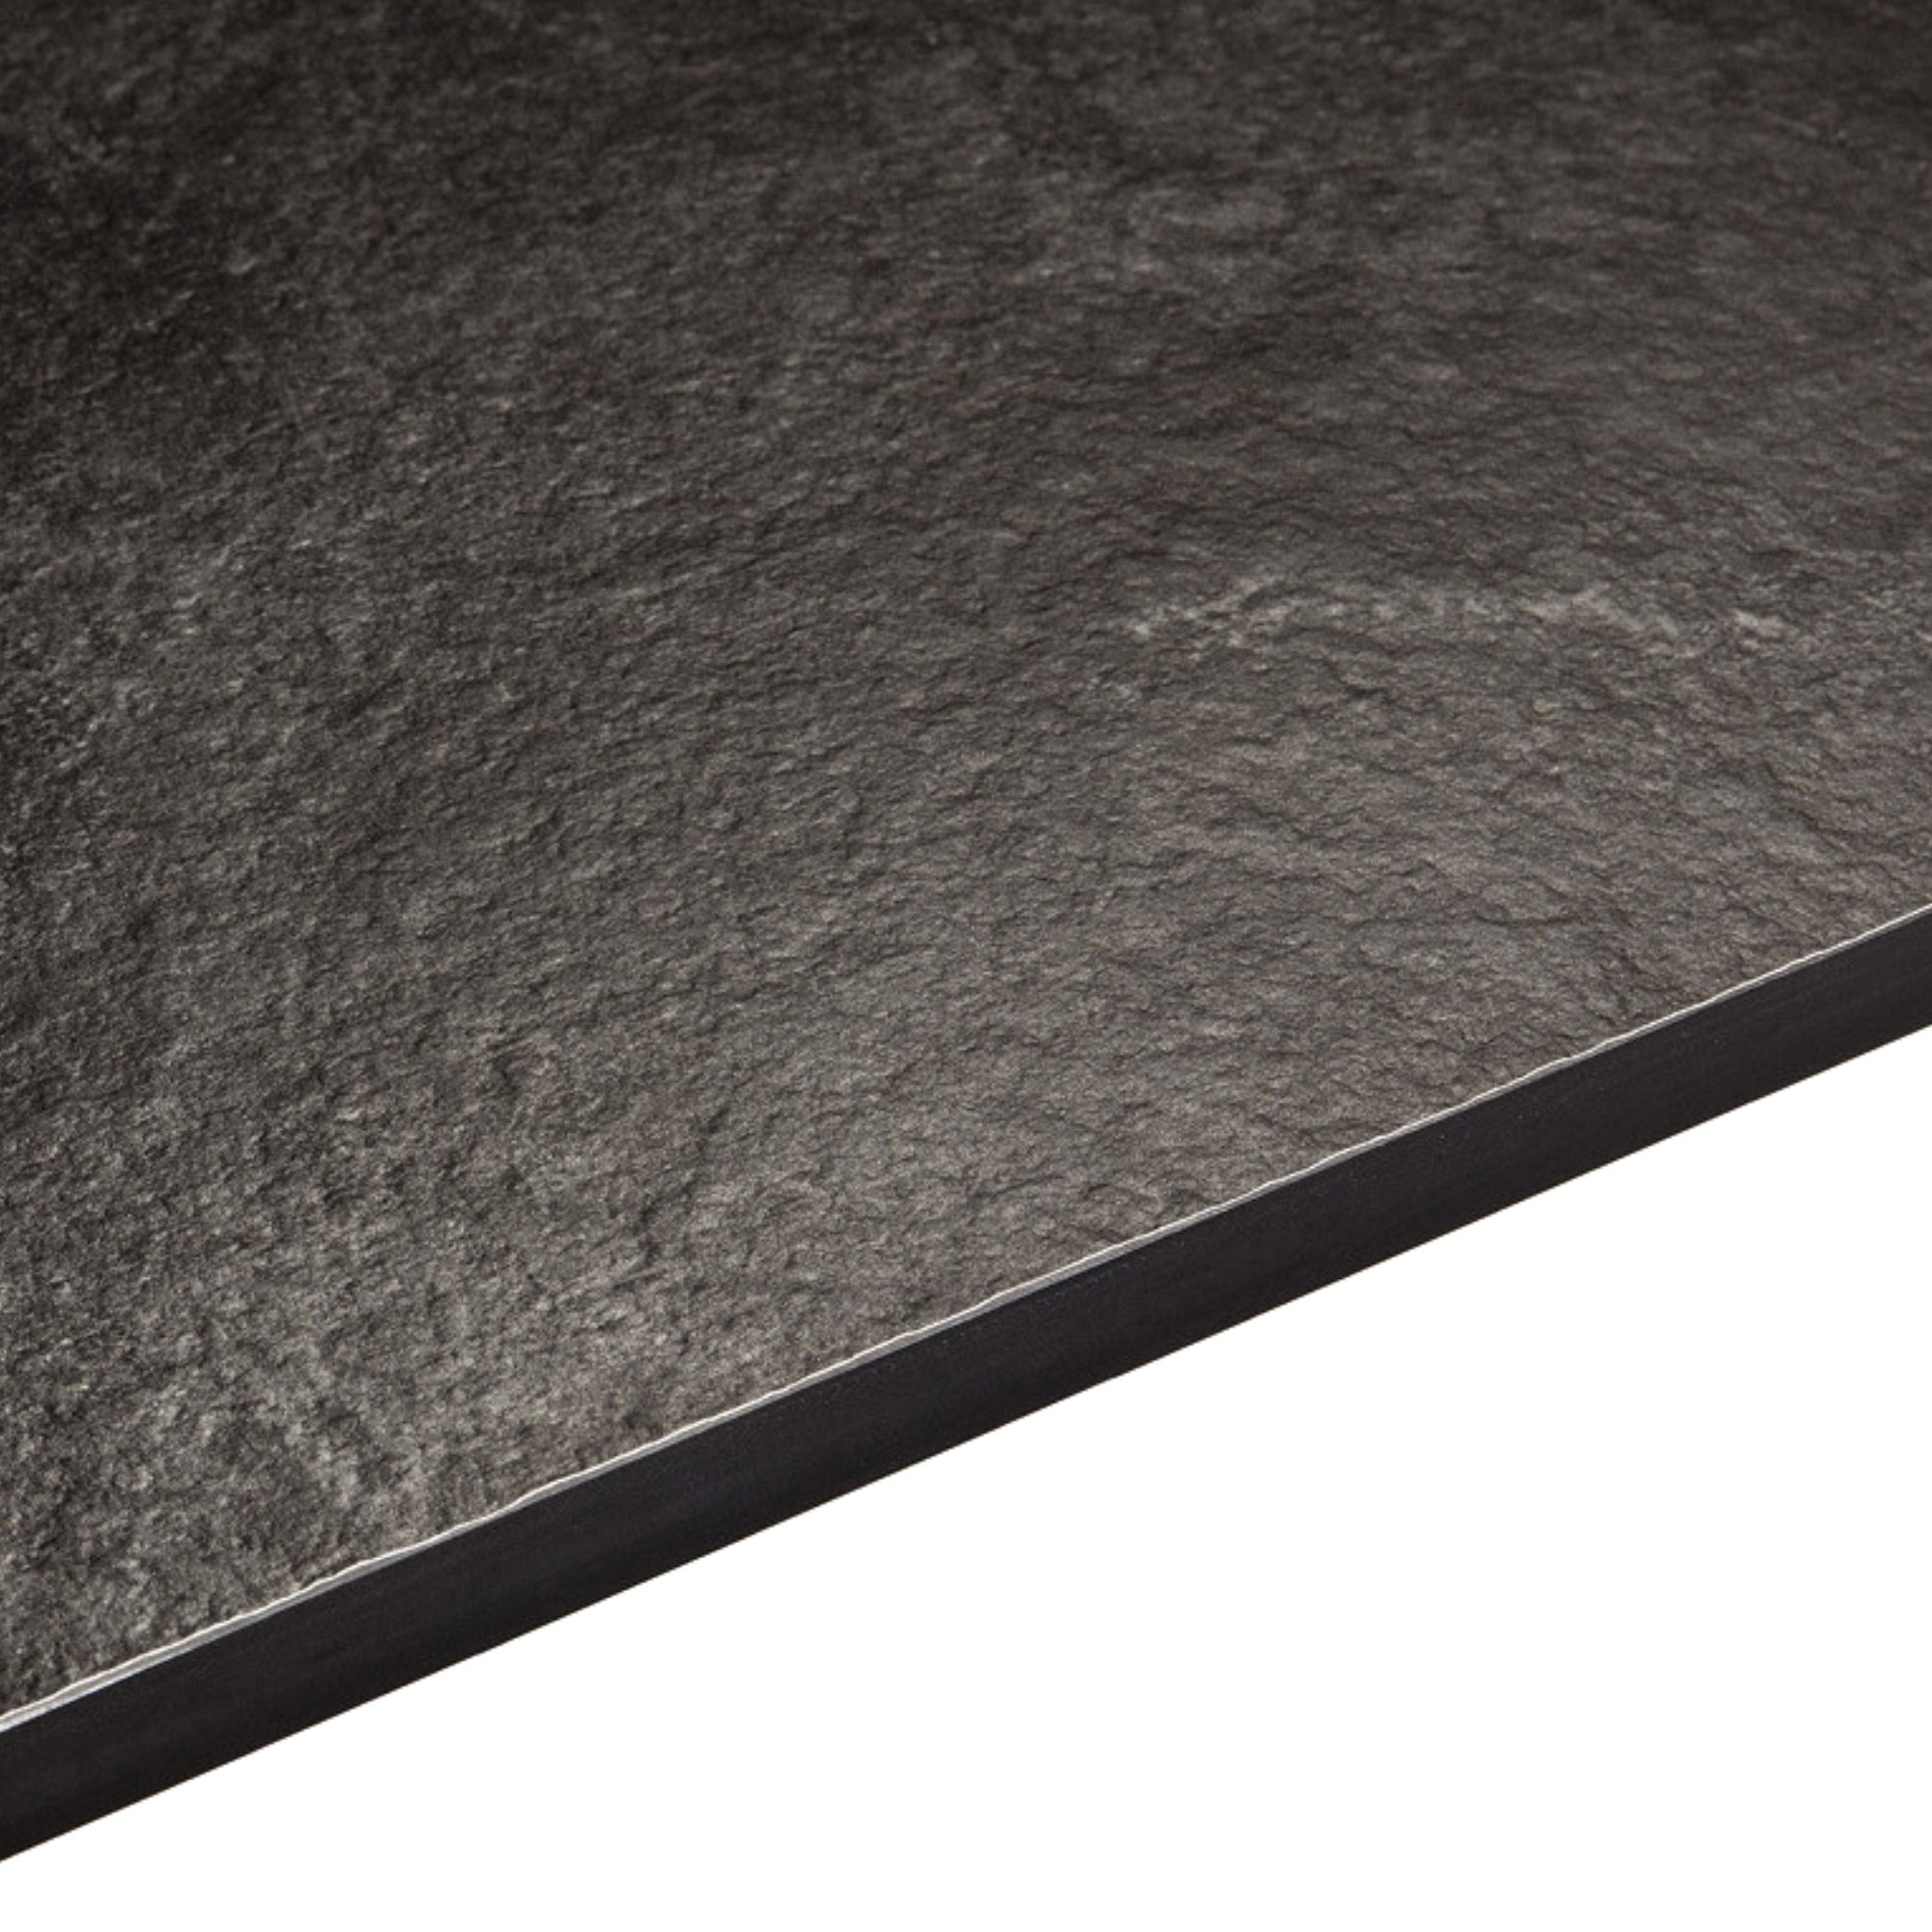 12.5 Zinc Argente Black Slate effect Curved Worktop, (L)950mm